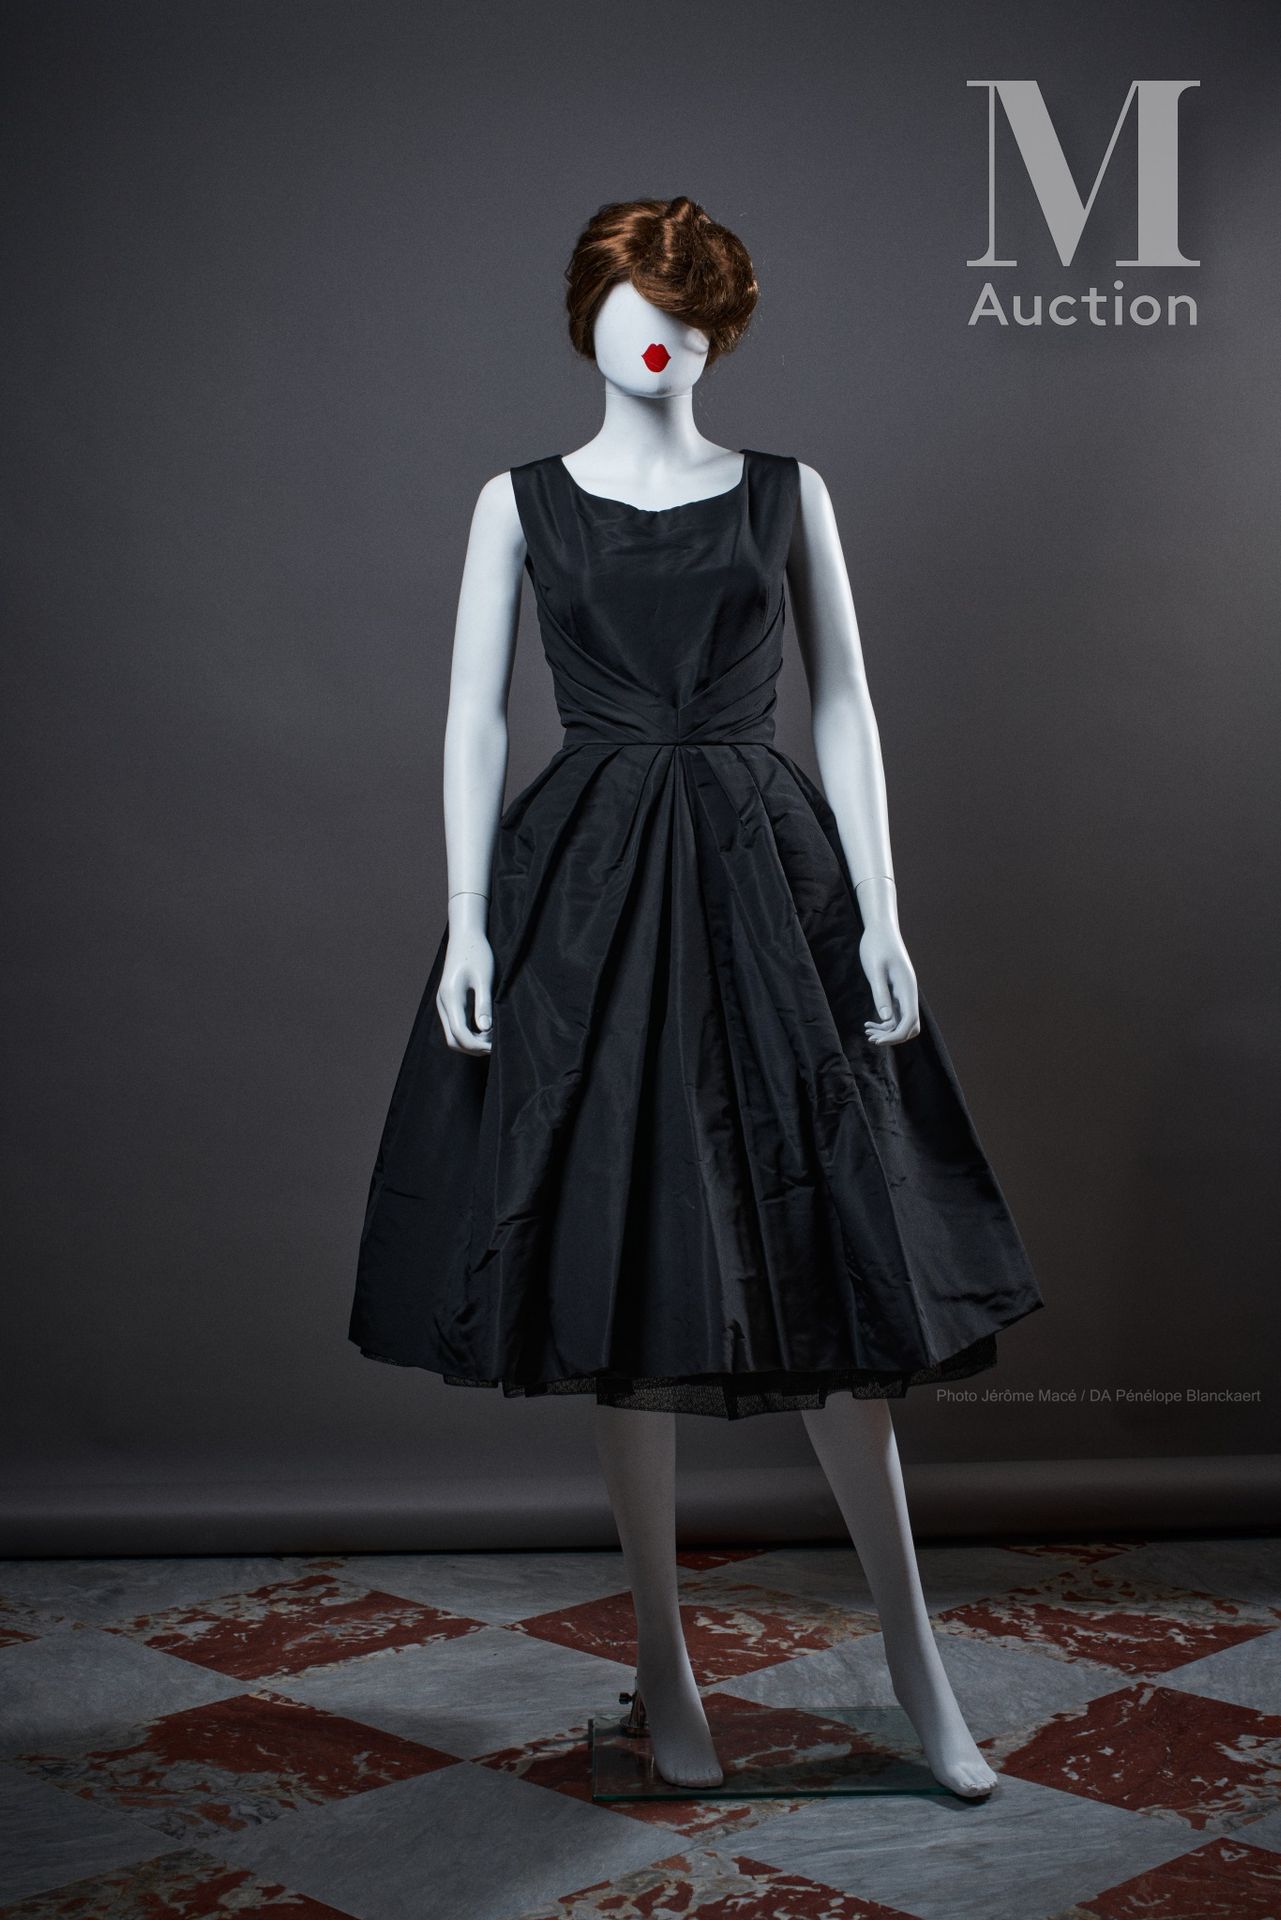 CHRISTIAN DIOR BOUTIQUE N°163002 - 1950'S 礼服

黑色丝质，正面有垂坠效果，褶皱裙，薄纱衬裙

尺寸：S约。

黑色爪&hellip;